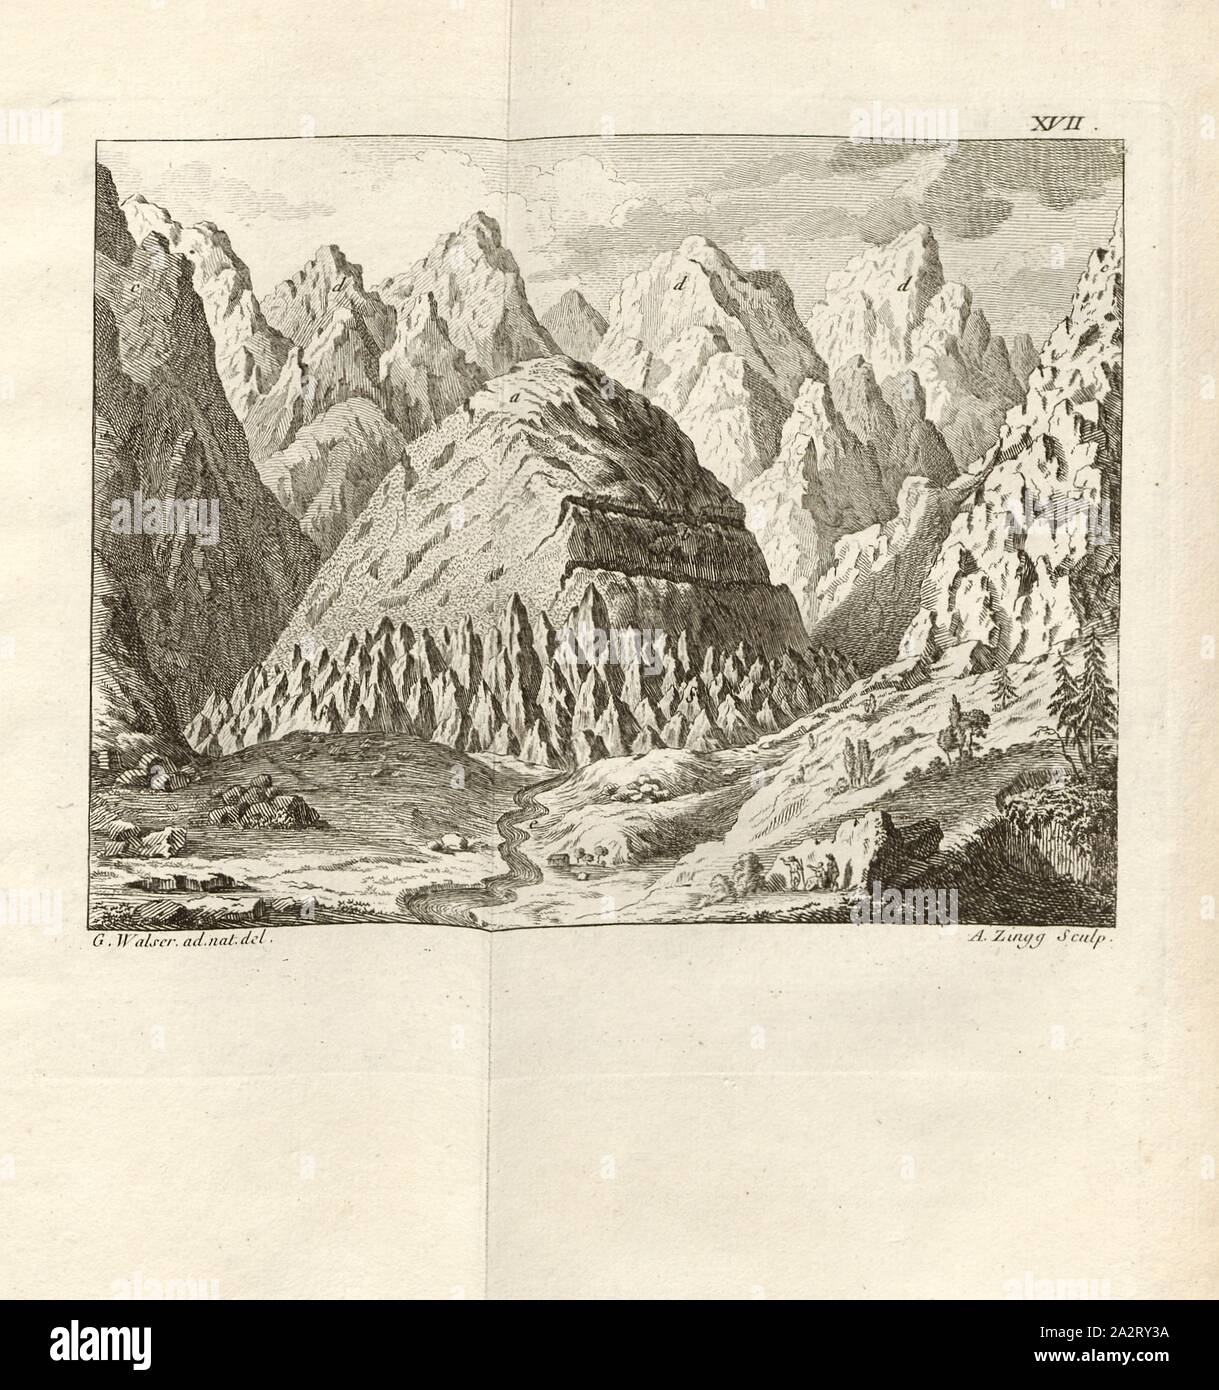 L'amas de Bernina e la Bundes, visualizza Bernina, firmato: G. Walser (ad nat. Del.); A. Zingg (sculp.), Fig. 19, XVII, dopo p. 372, p. 414, Walser, Gabriel (annuncio nat. canc.); Zingg, Adrian (sculp.), 1770, Gottlieb Sigmund Gruner; Louis-Félix Guinement de Keralio: Histoire Naturelle des glacieres de Suisse. Parigi: Panckoucke, MDCCLXX [1770 Foto Stock